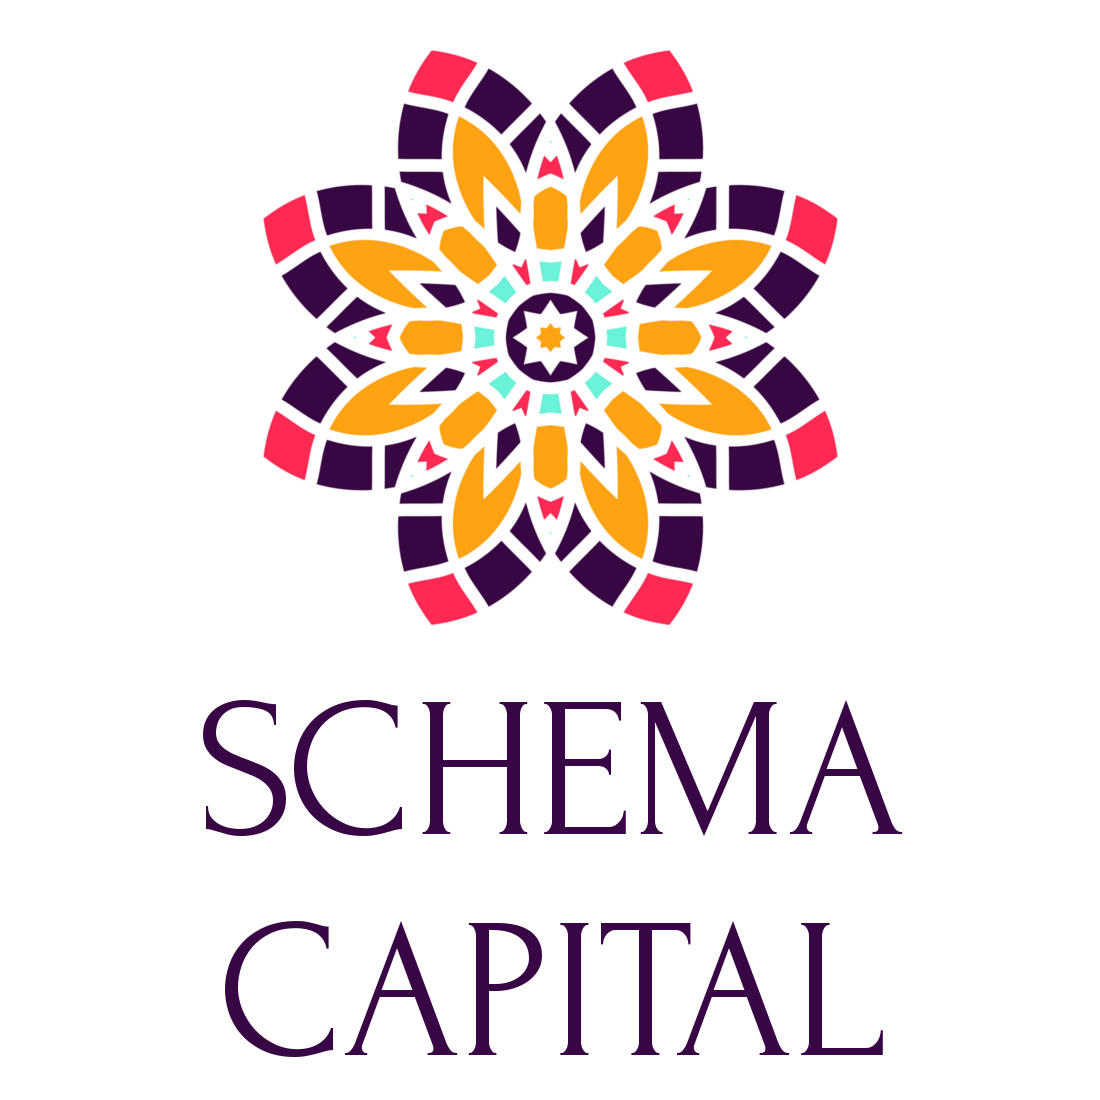 Schema Capital